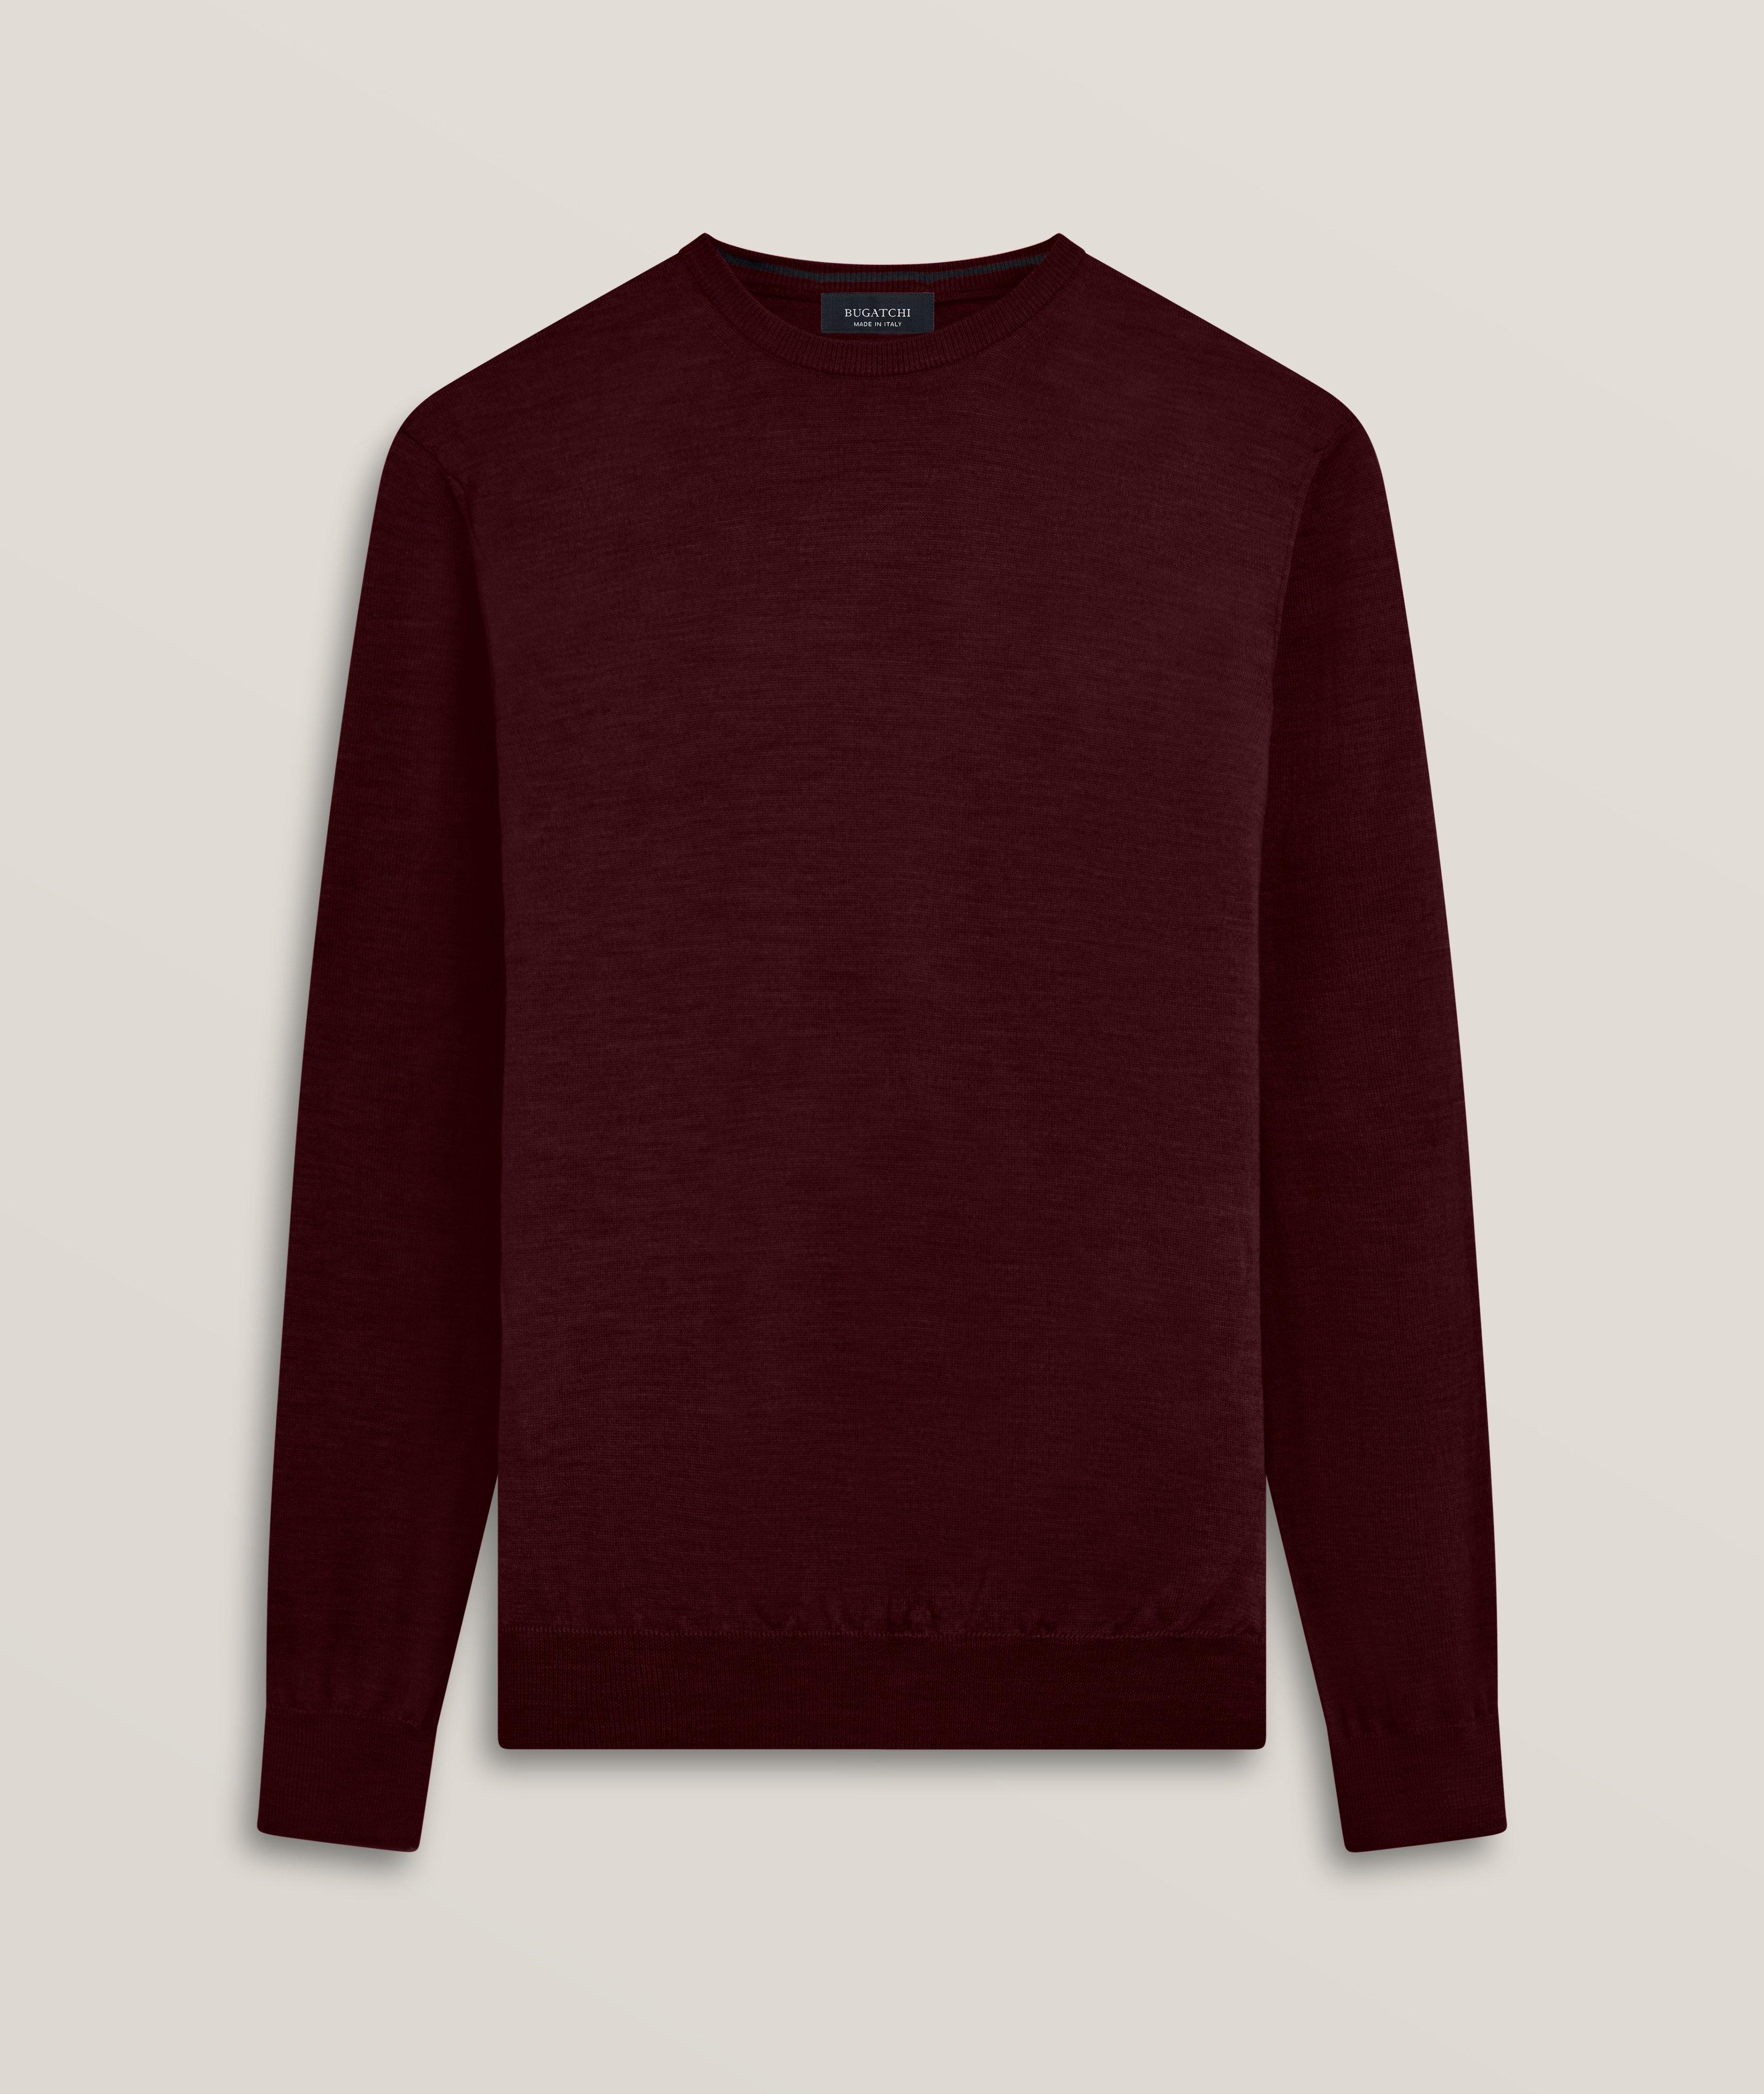 Super Merino Wool Crewneck Sweater image 0